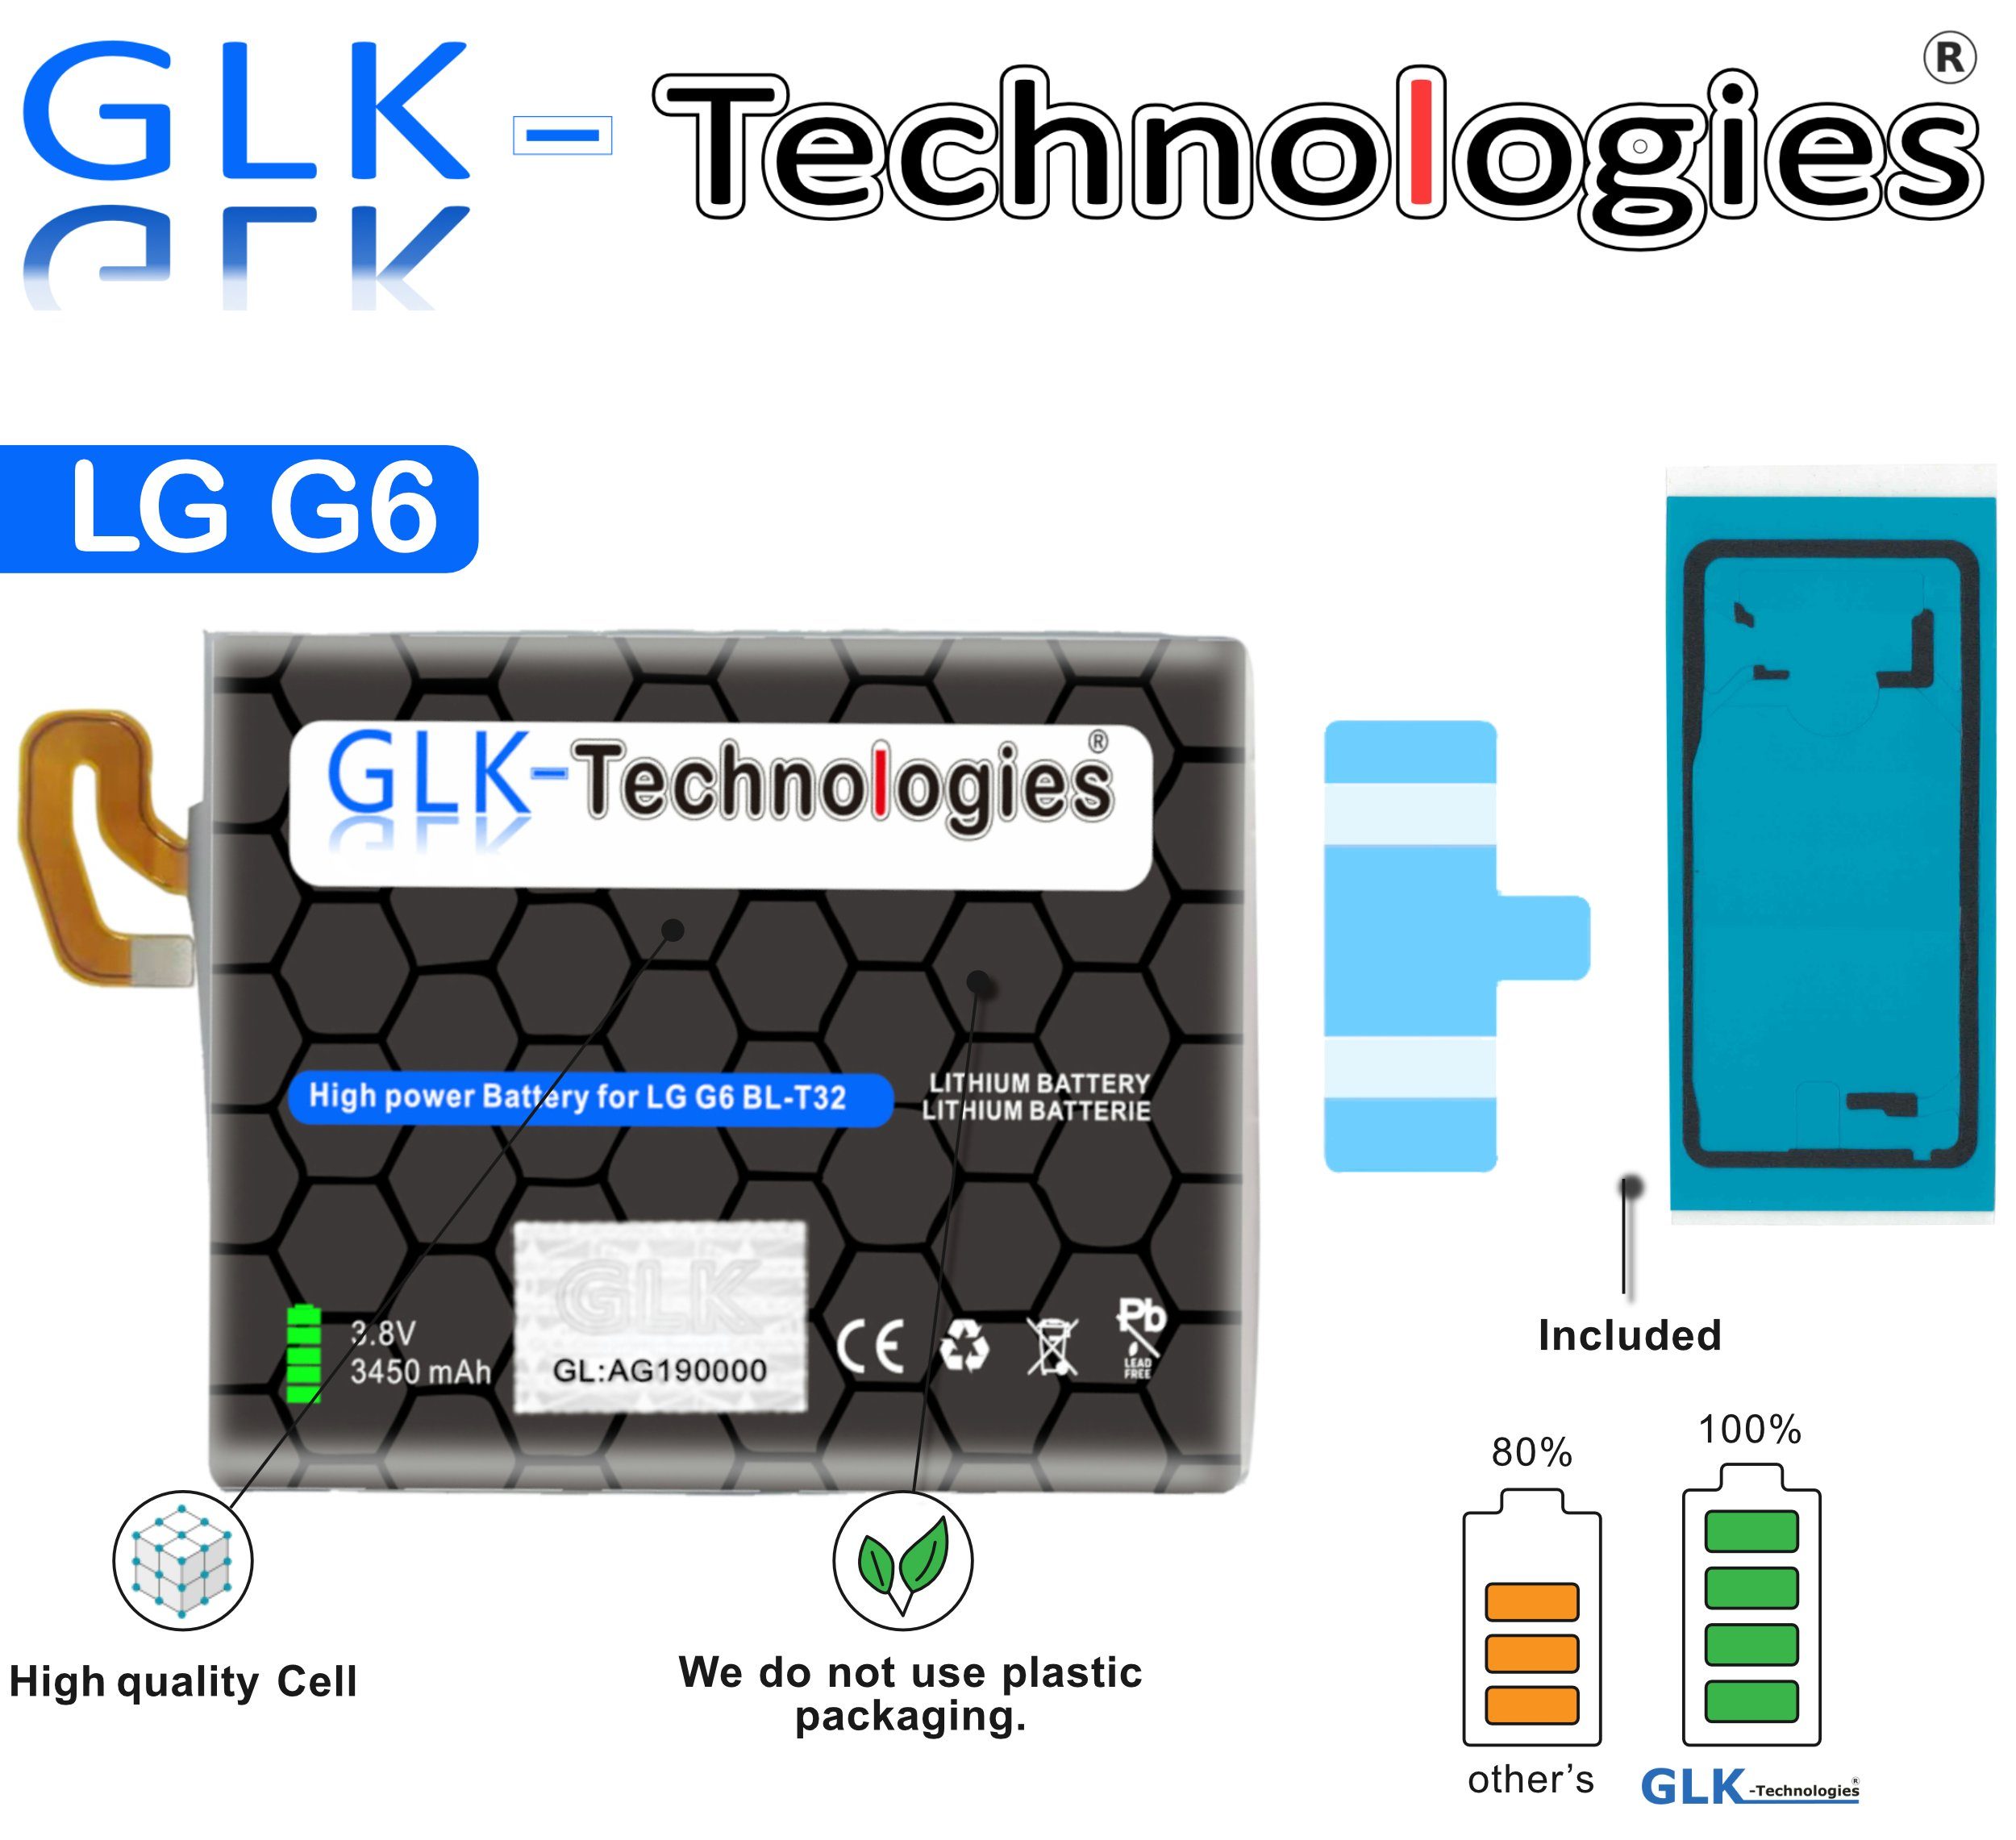 GLK-Technologies High Power Ersatzakku kompatibel mit LG G6 G6+ H870 H871 H872 LS993 VS998, GLK-Technologies Battery, accu, 3450 mAh Akku, Ohne Set Smartphone-Akku 3450 mAh